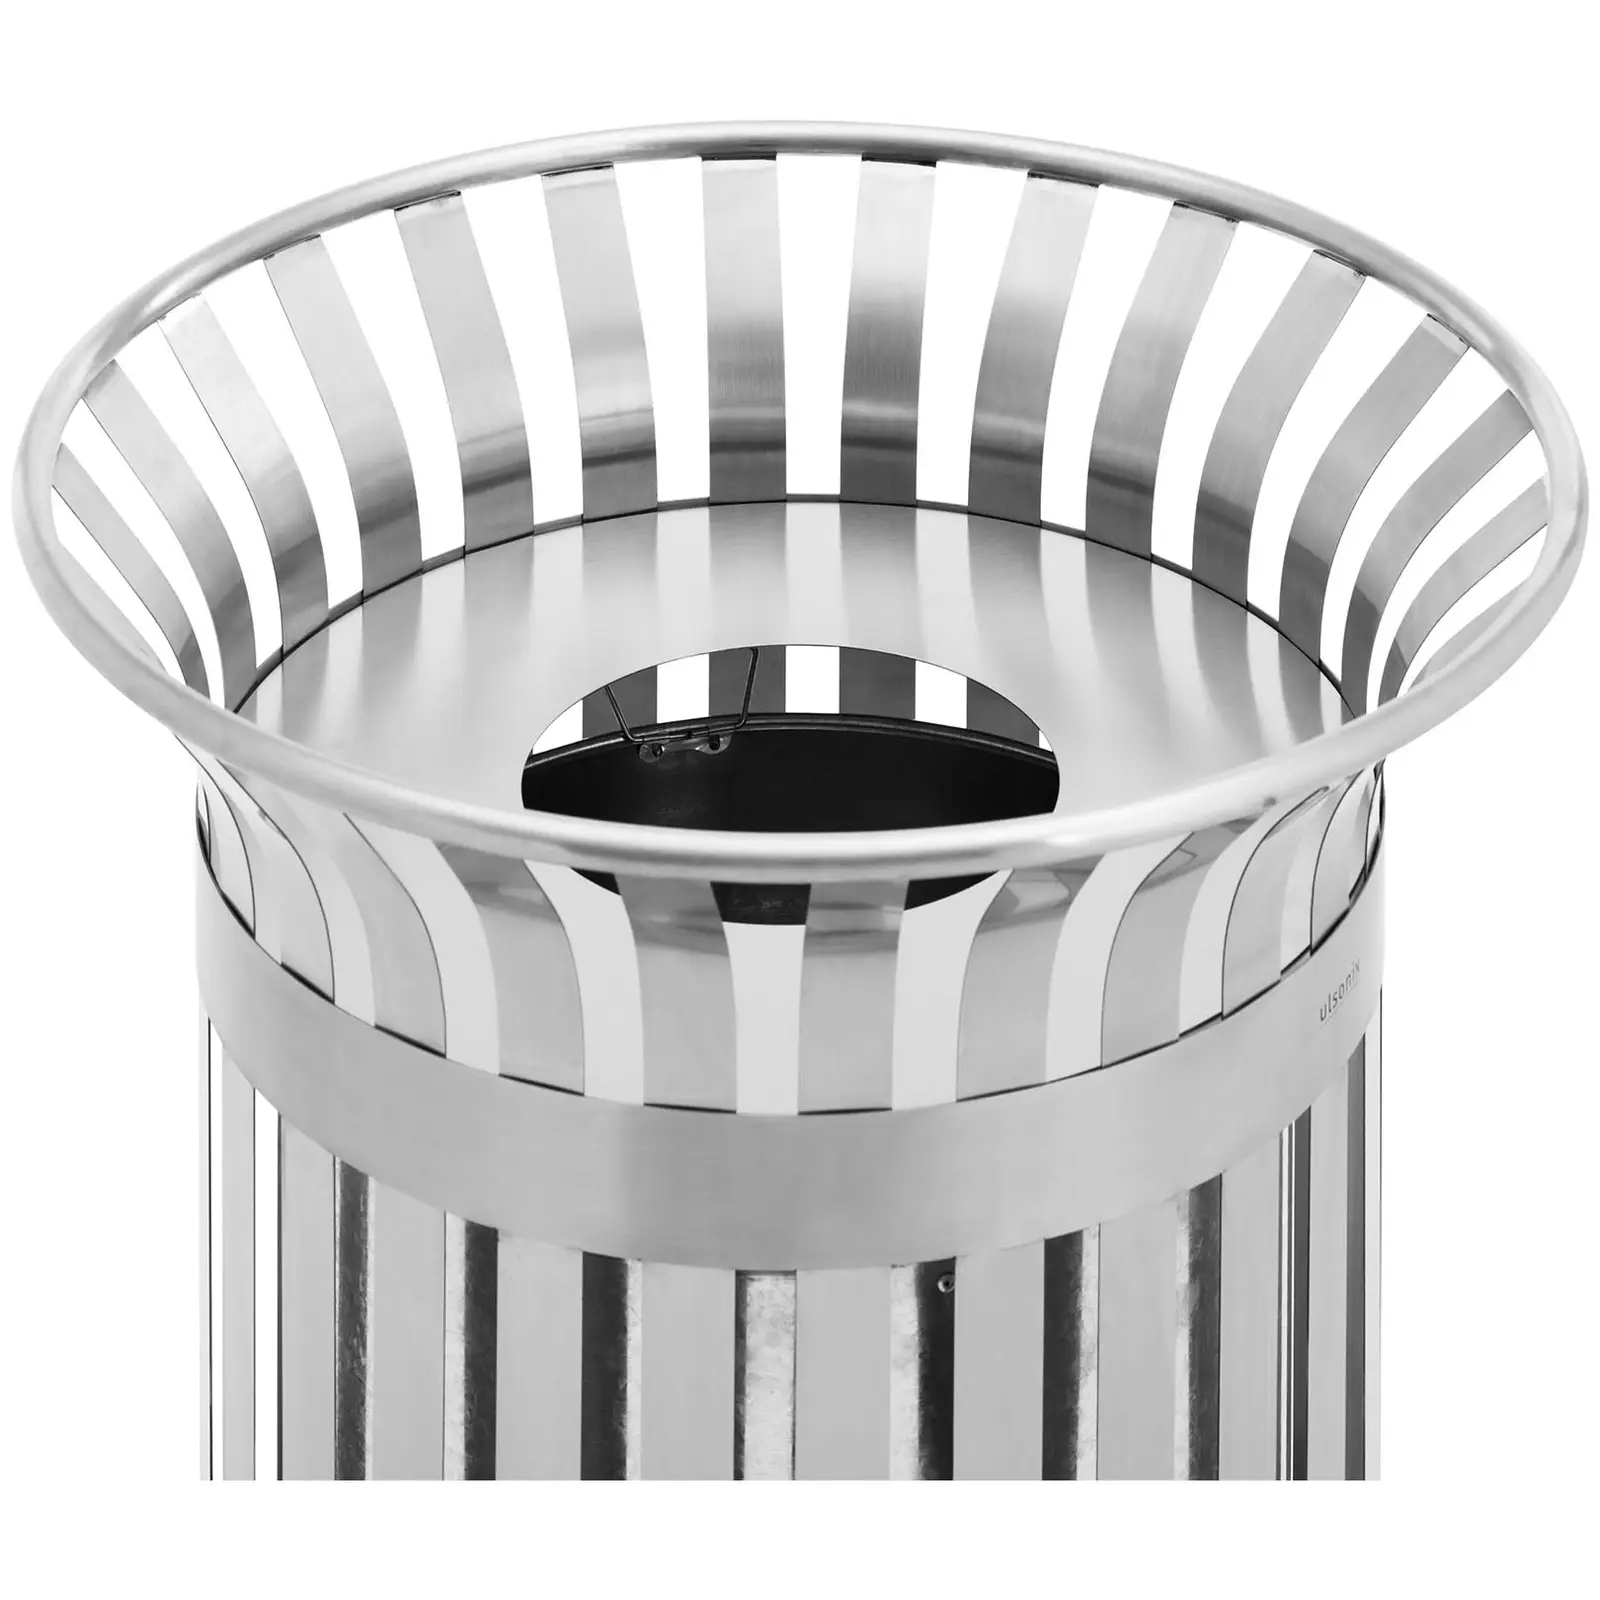 Rubbish Bin - round - wide slot - stainless steel / galvanised steel - silver